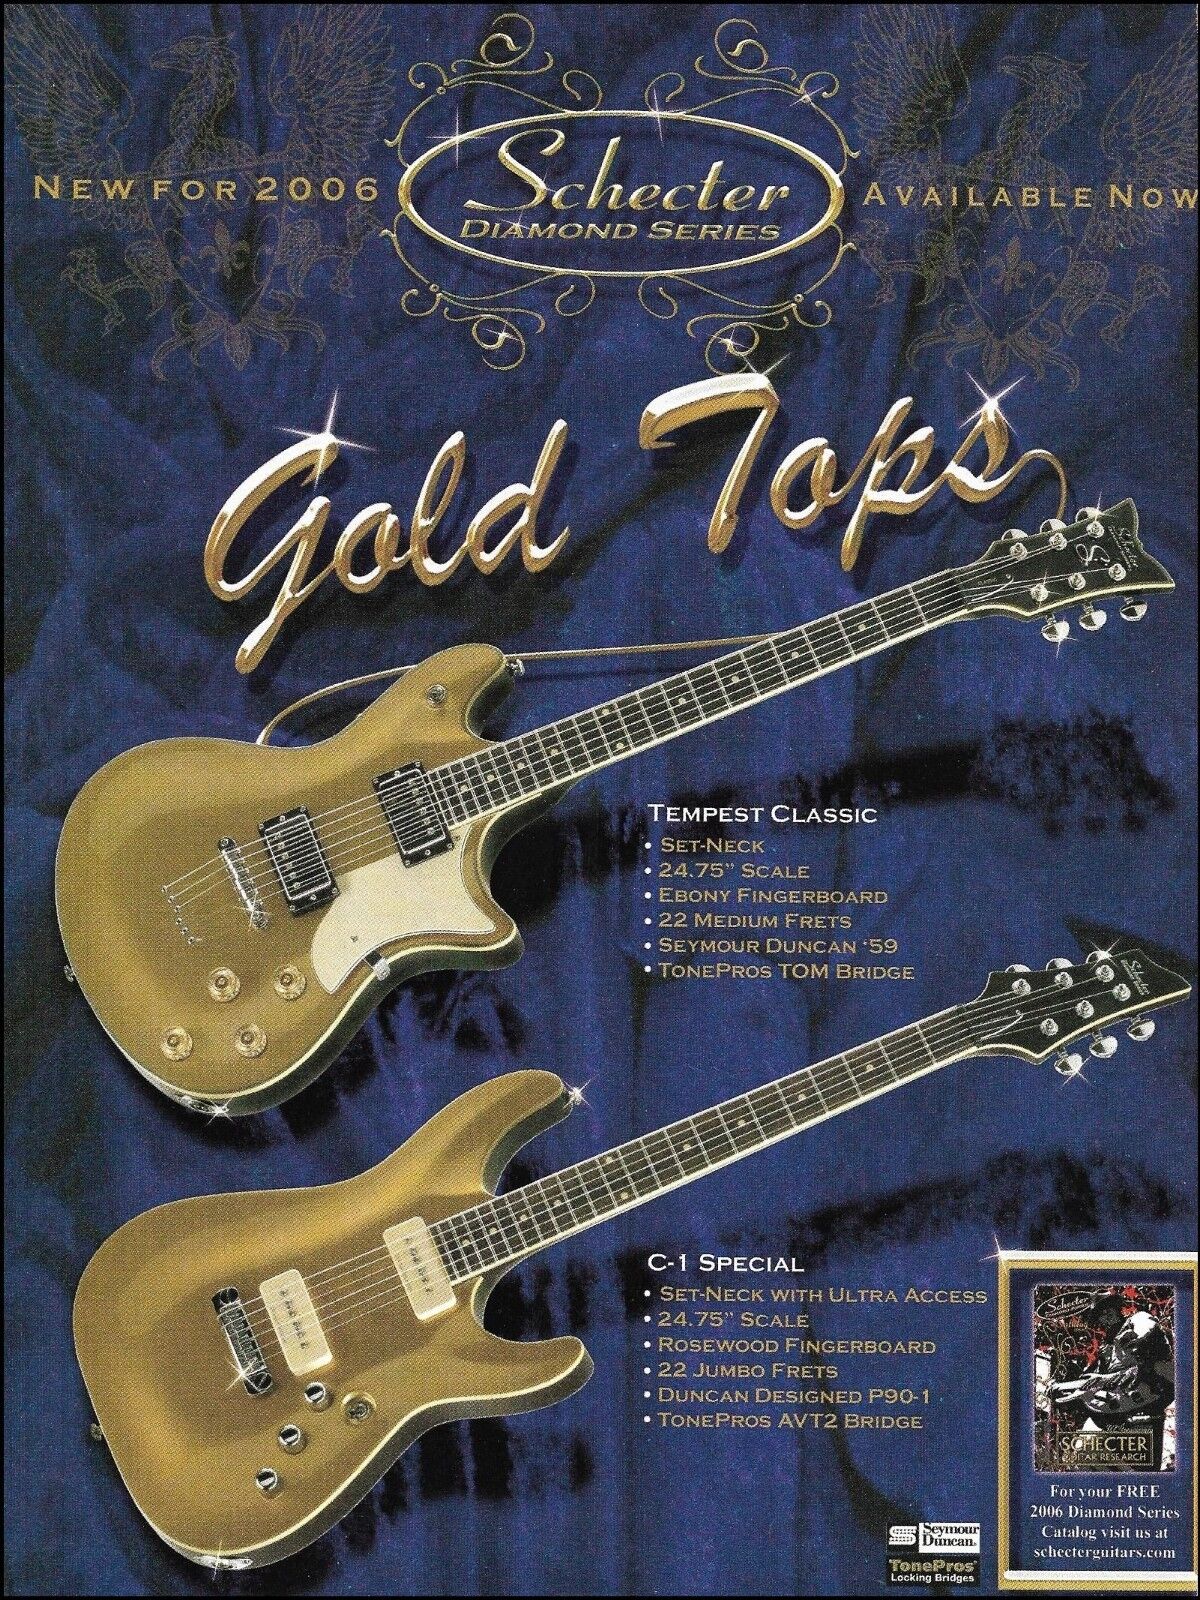 Schecter Diamond Series Tempest Classic & C-1 Special Gold Top guitars 8 x 11 ad